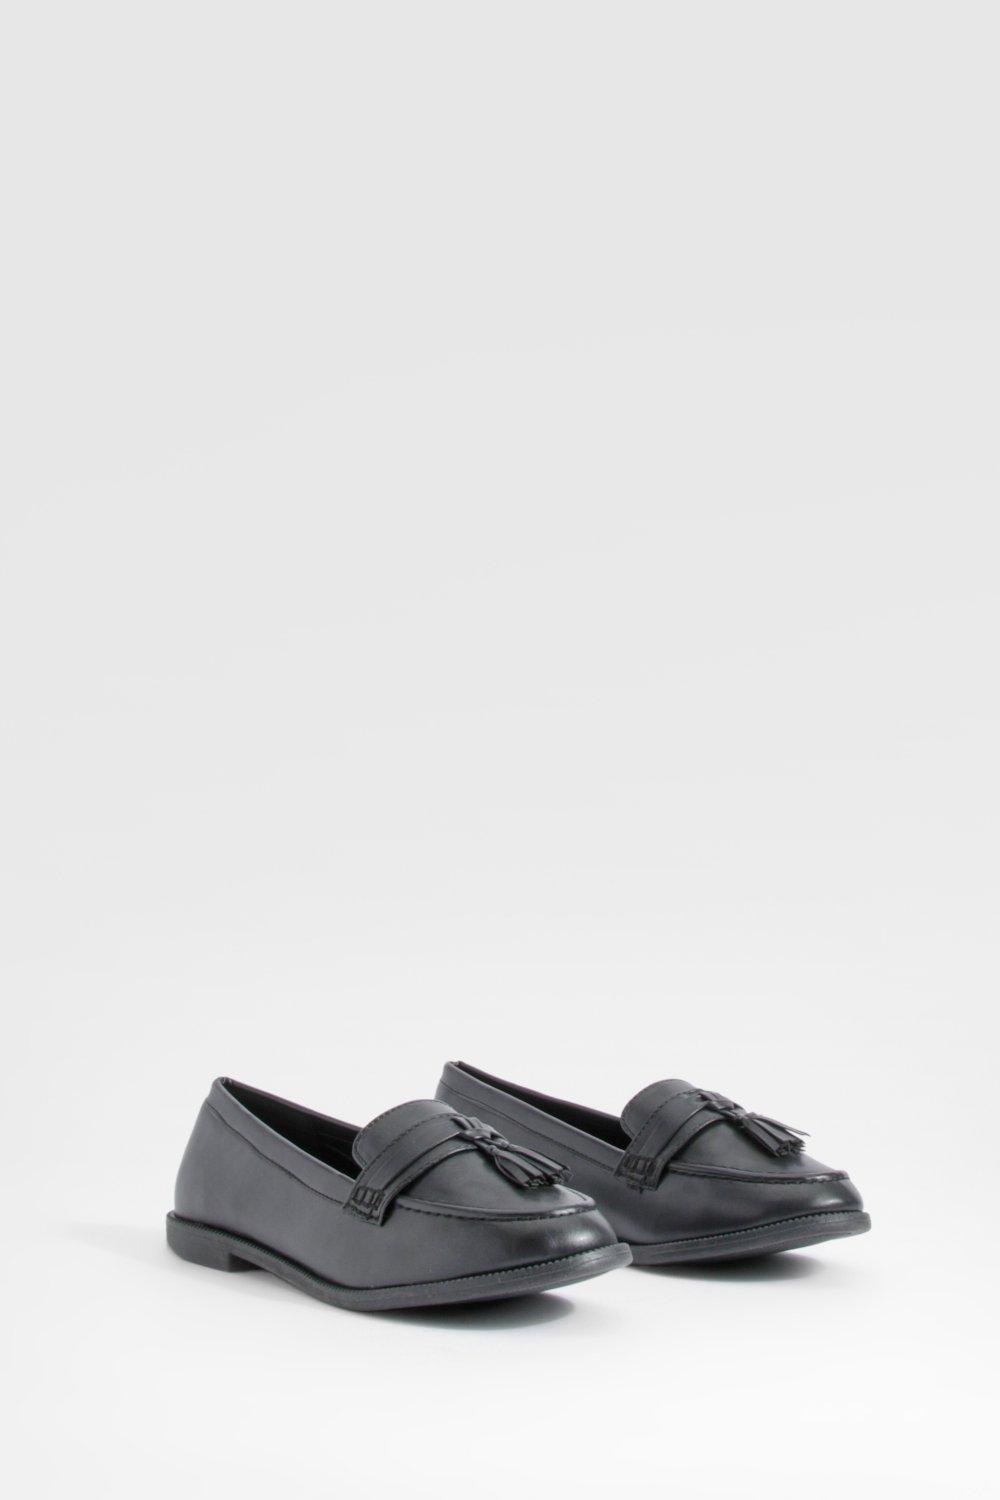 Womens Tassel Loafers - Black - 3, Black